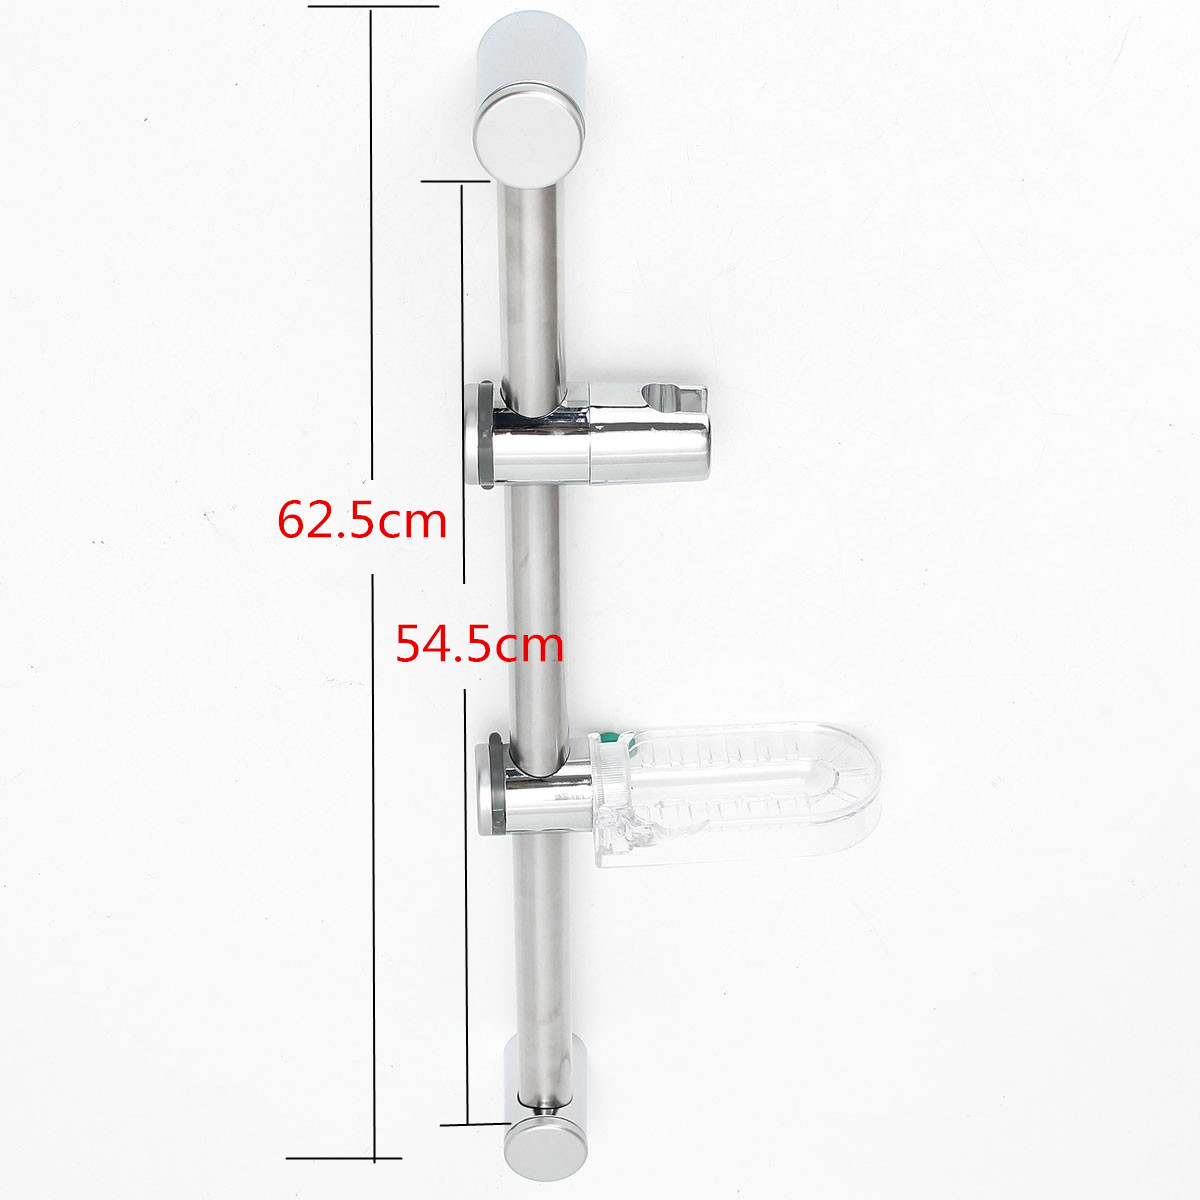 Aluminium Shower Head Riser Slide Rail Adjustable Brackets with Soap Dish